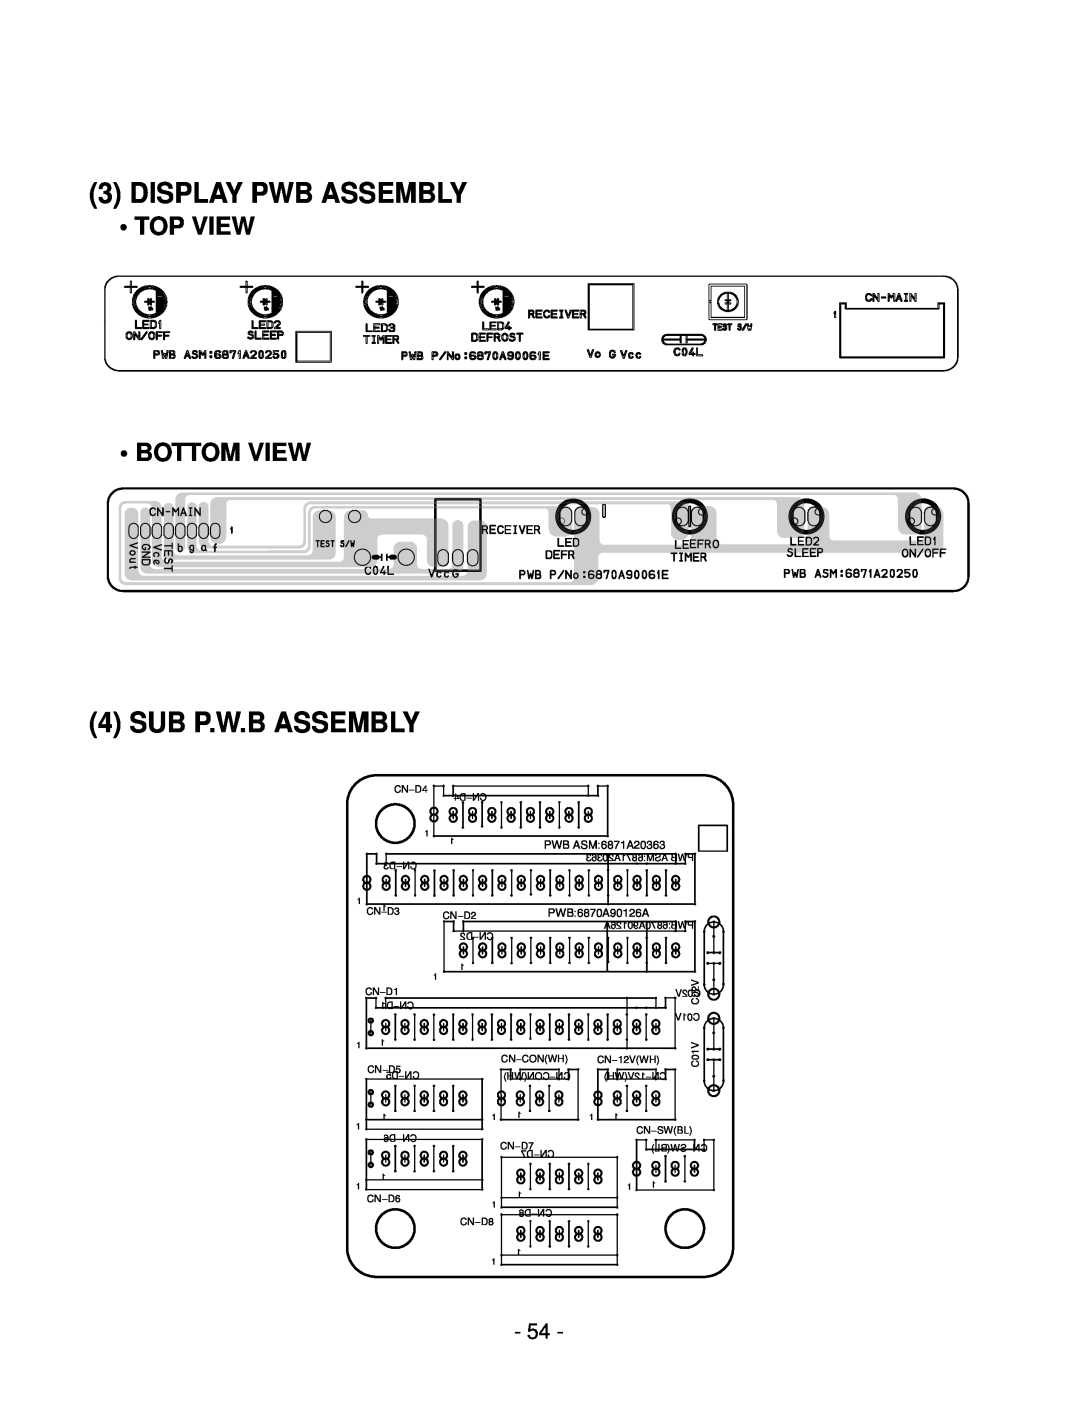 LG Electronics LSC183VMA Display Pwb Assembly, Sub P.W.B Assembly, Top View Bottom View, PWB ASM6871A20363, PWB6870A90126A 